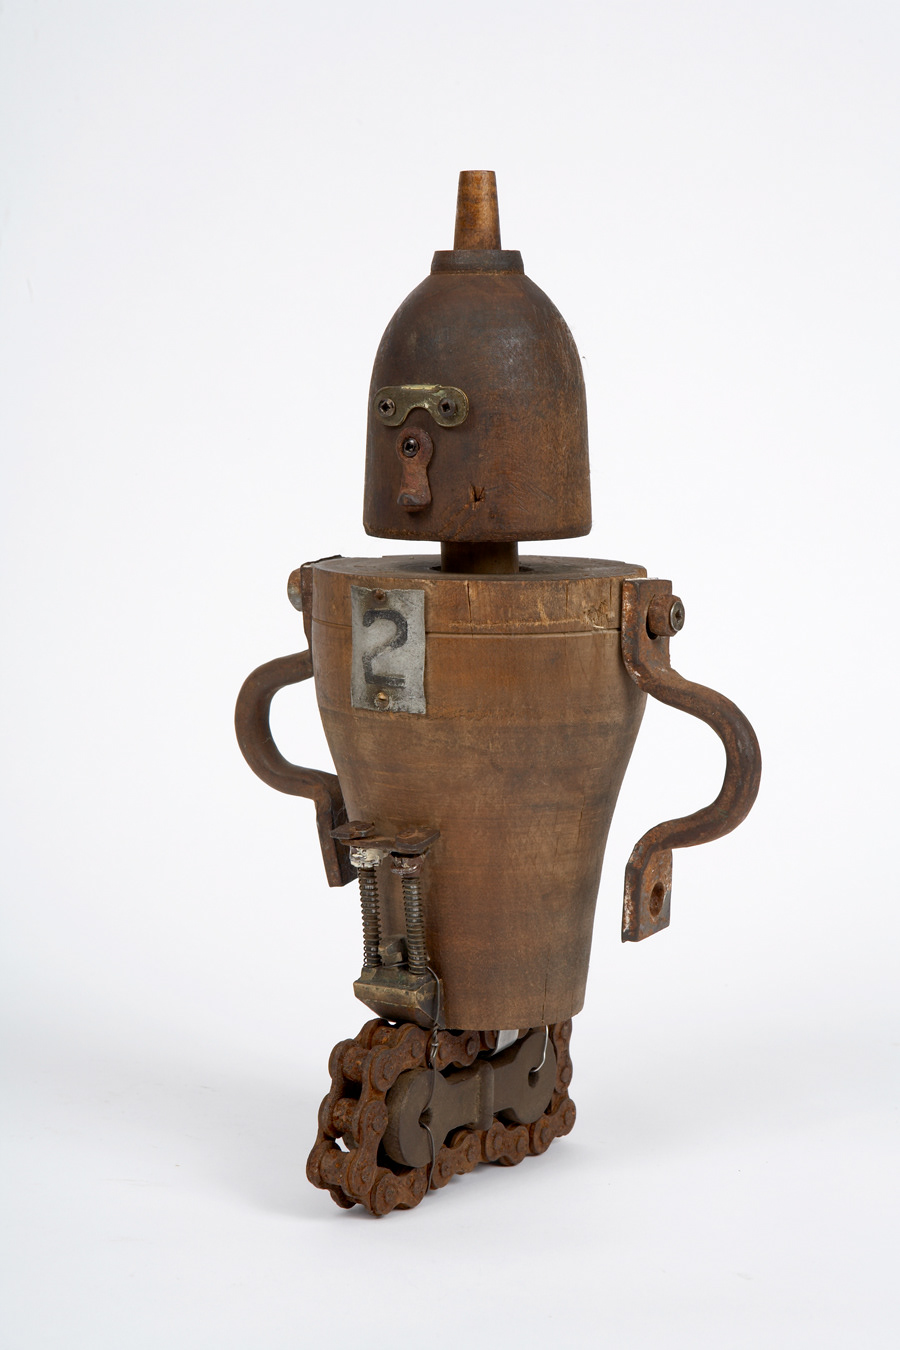 robots Shawn Murenbeeld wood Touchwood Design 3D  Illustration mechanical sculpture whimsical droids